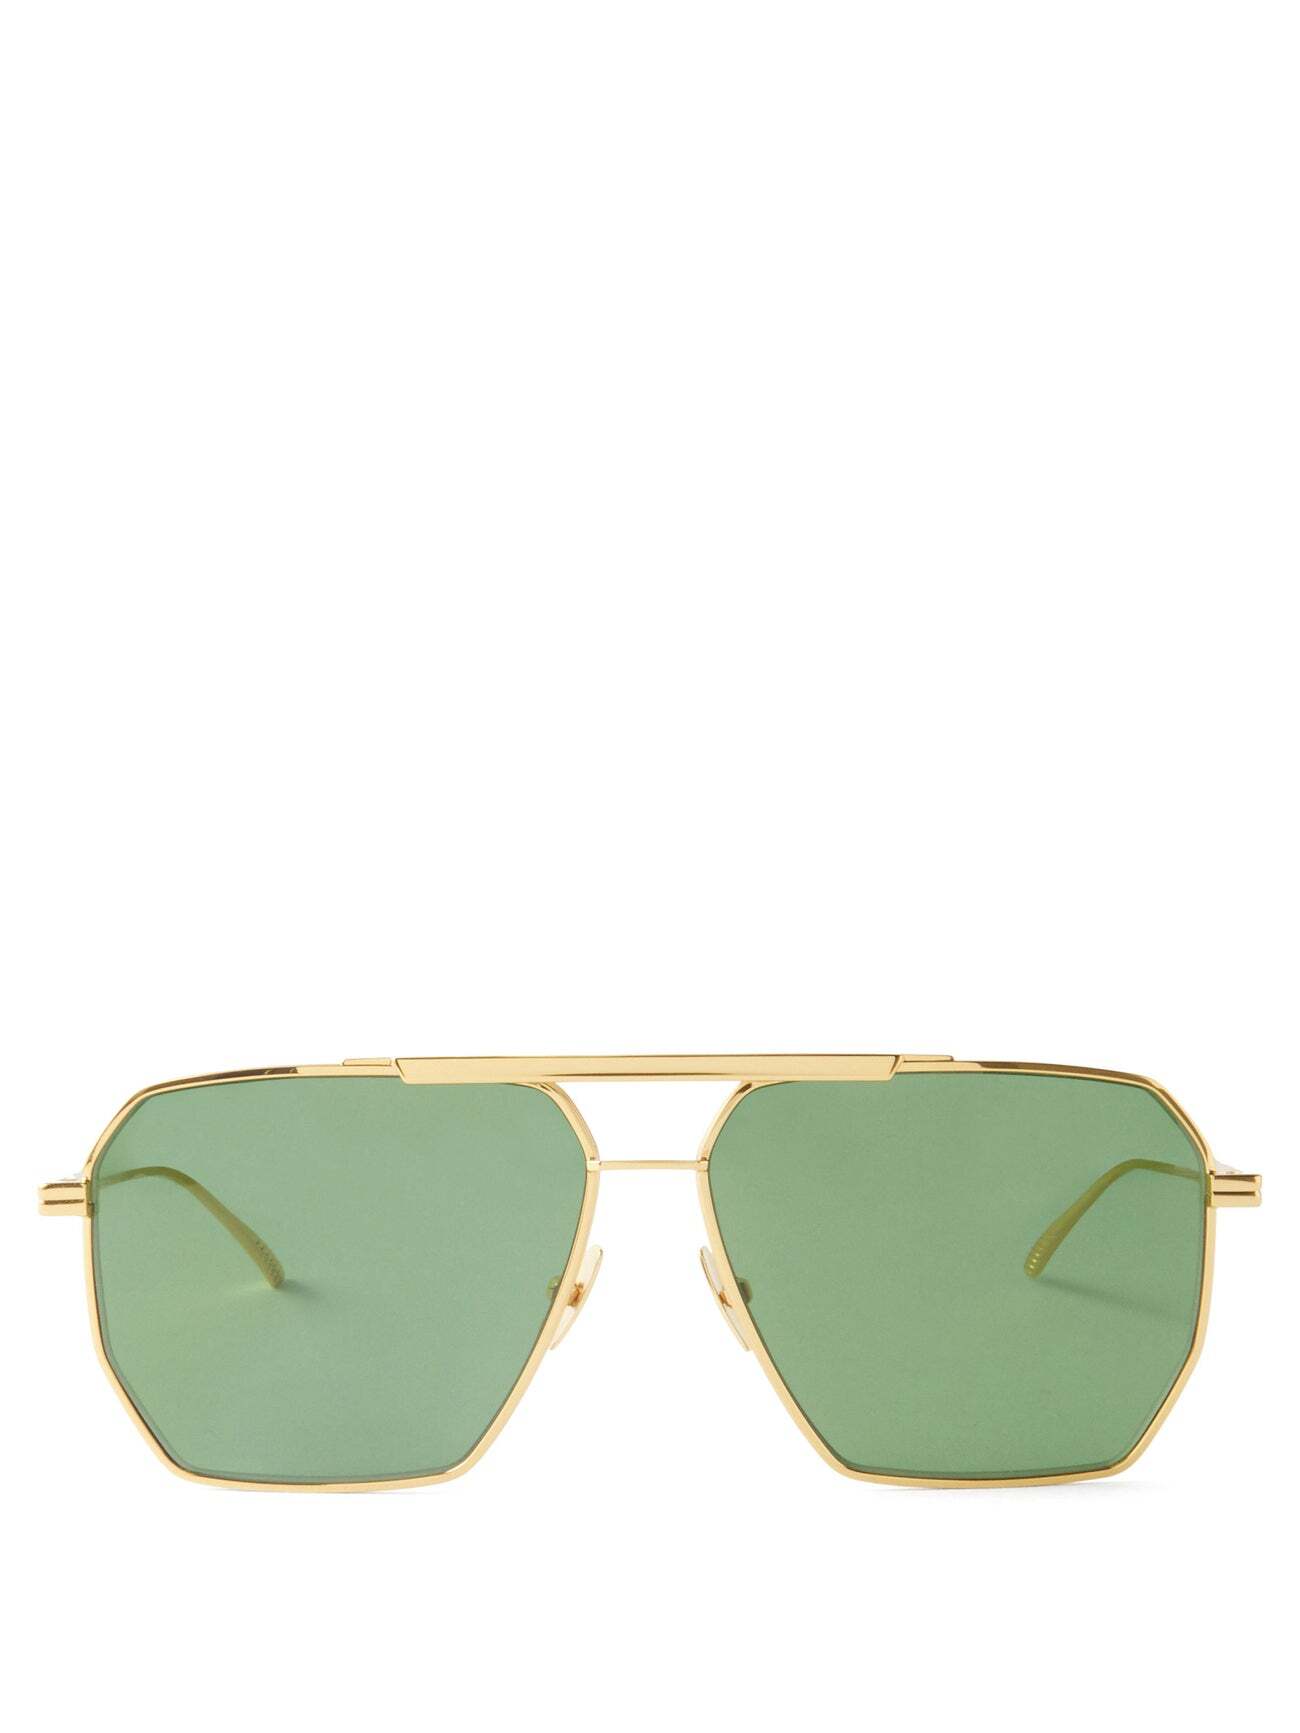 Bottega Veneta - Aviator Metal Sunglasses - Womens - Green Gold